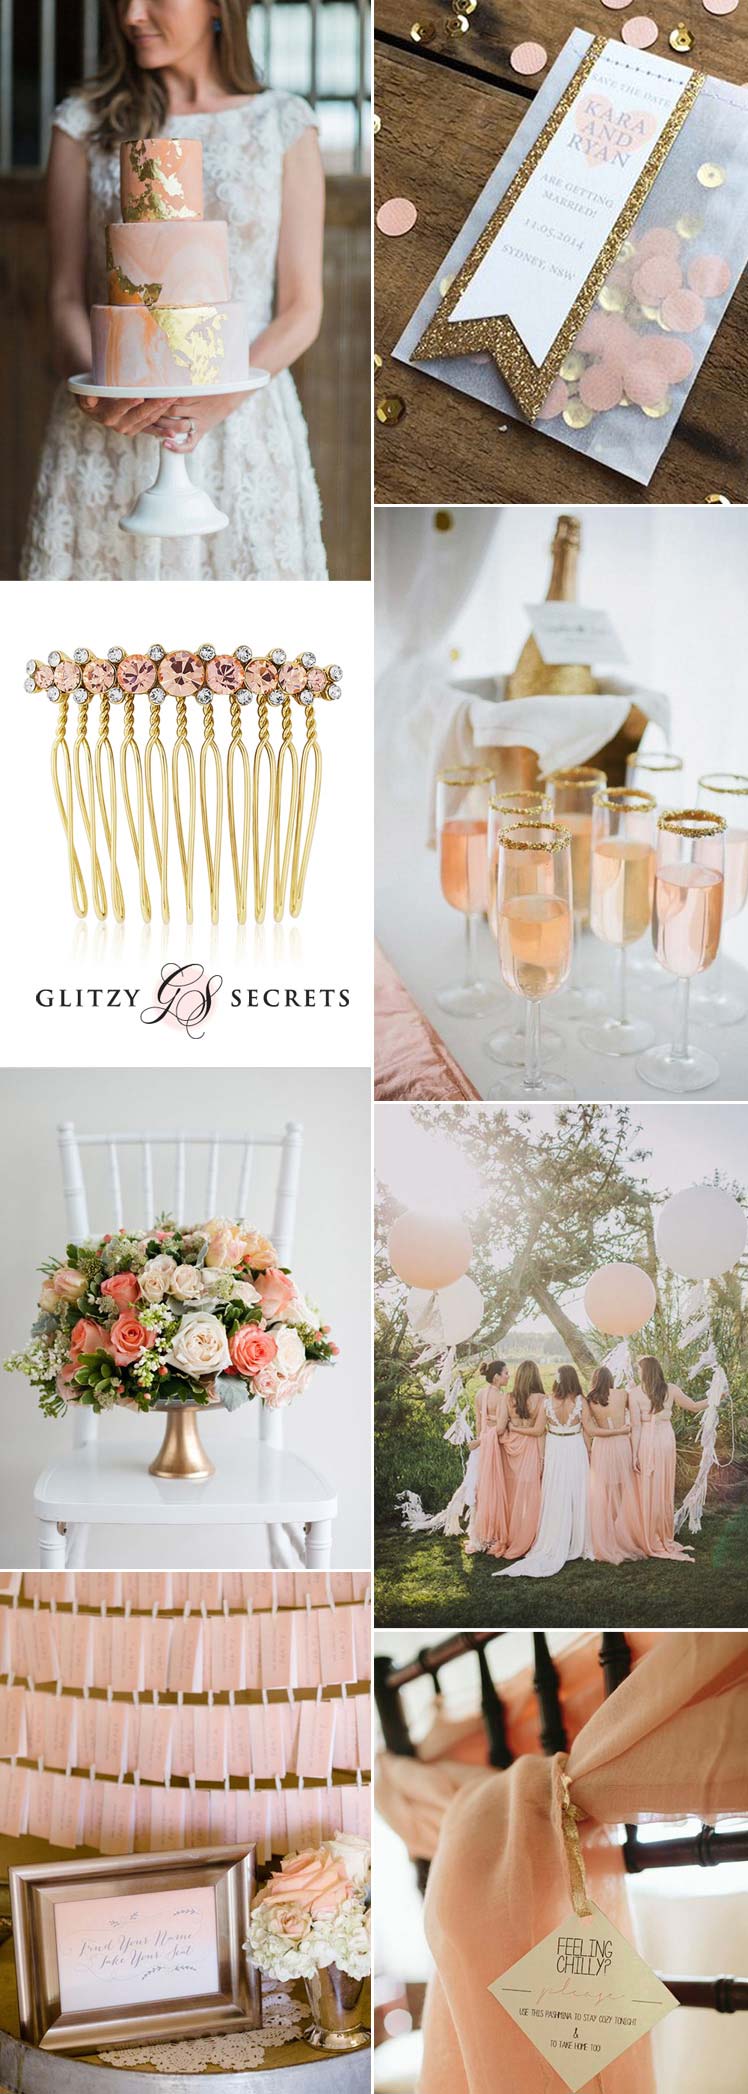 Peach and gold wedding colour scheme ideas